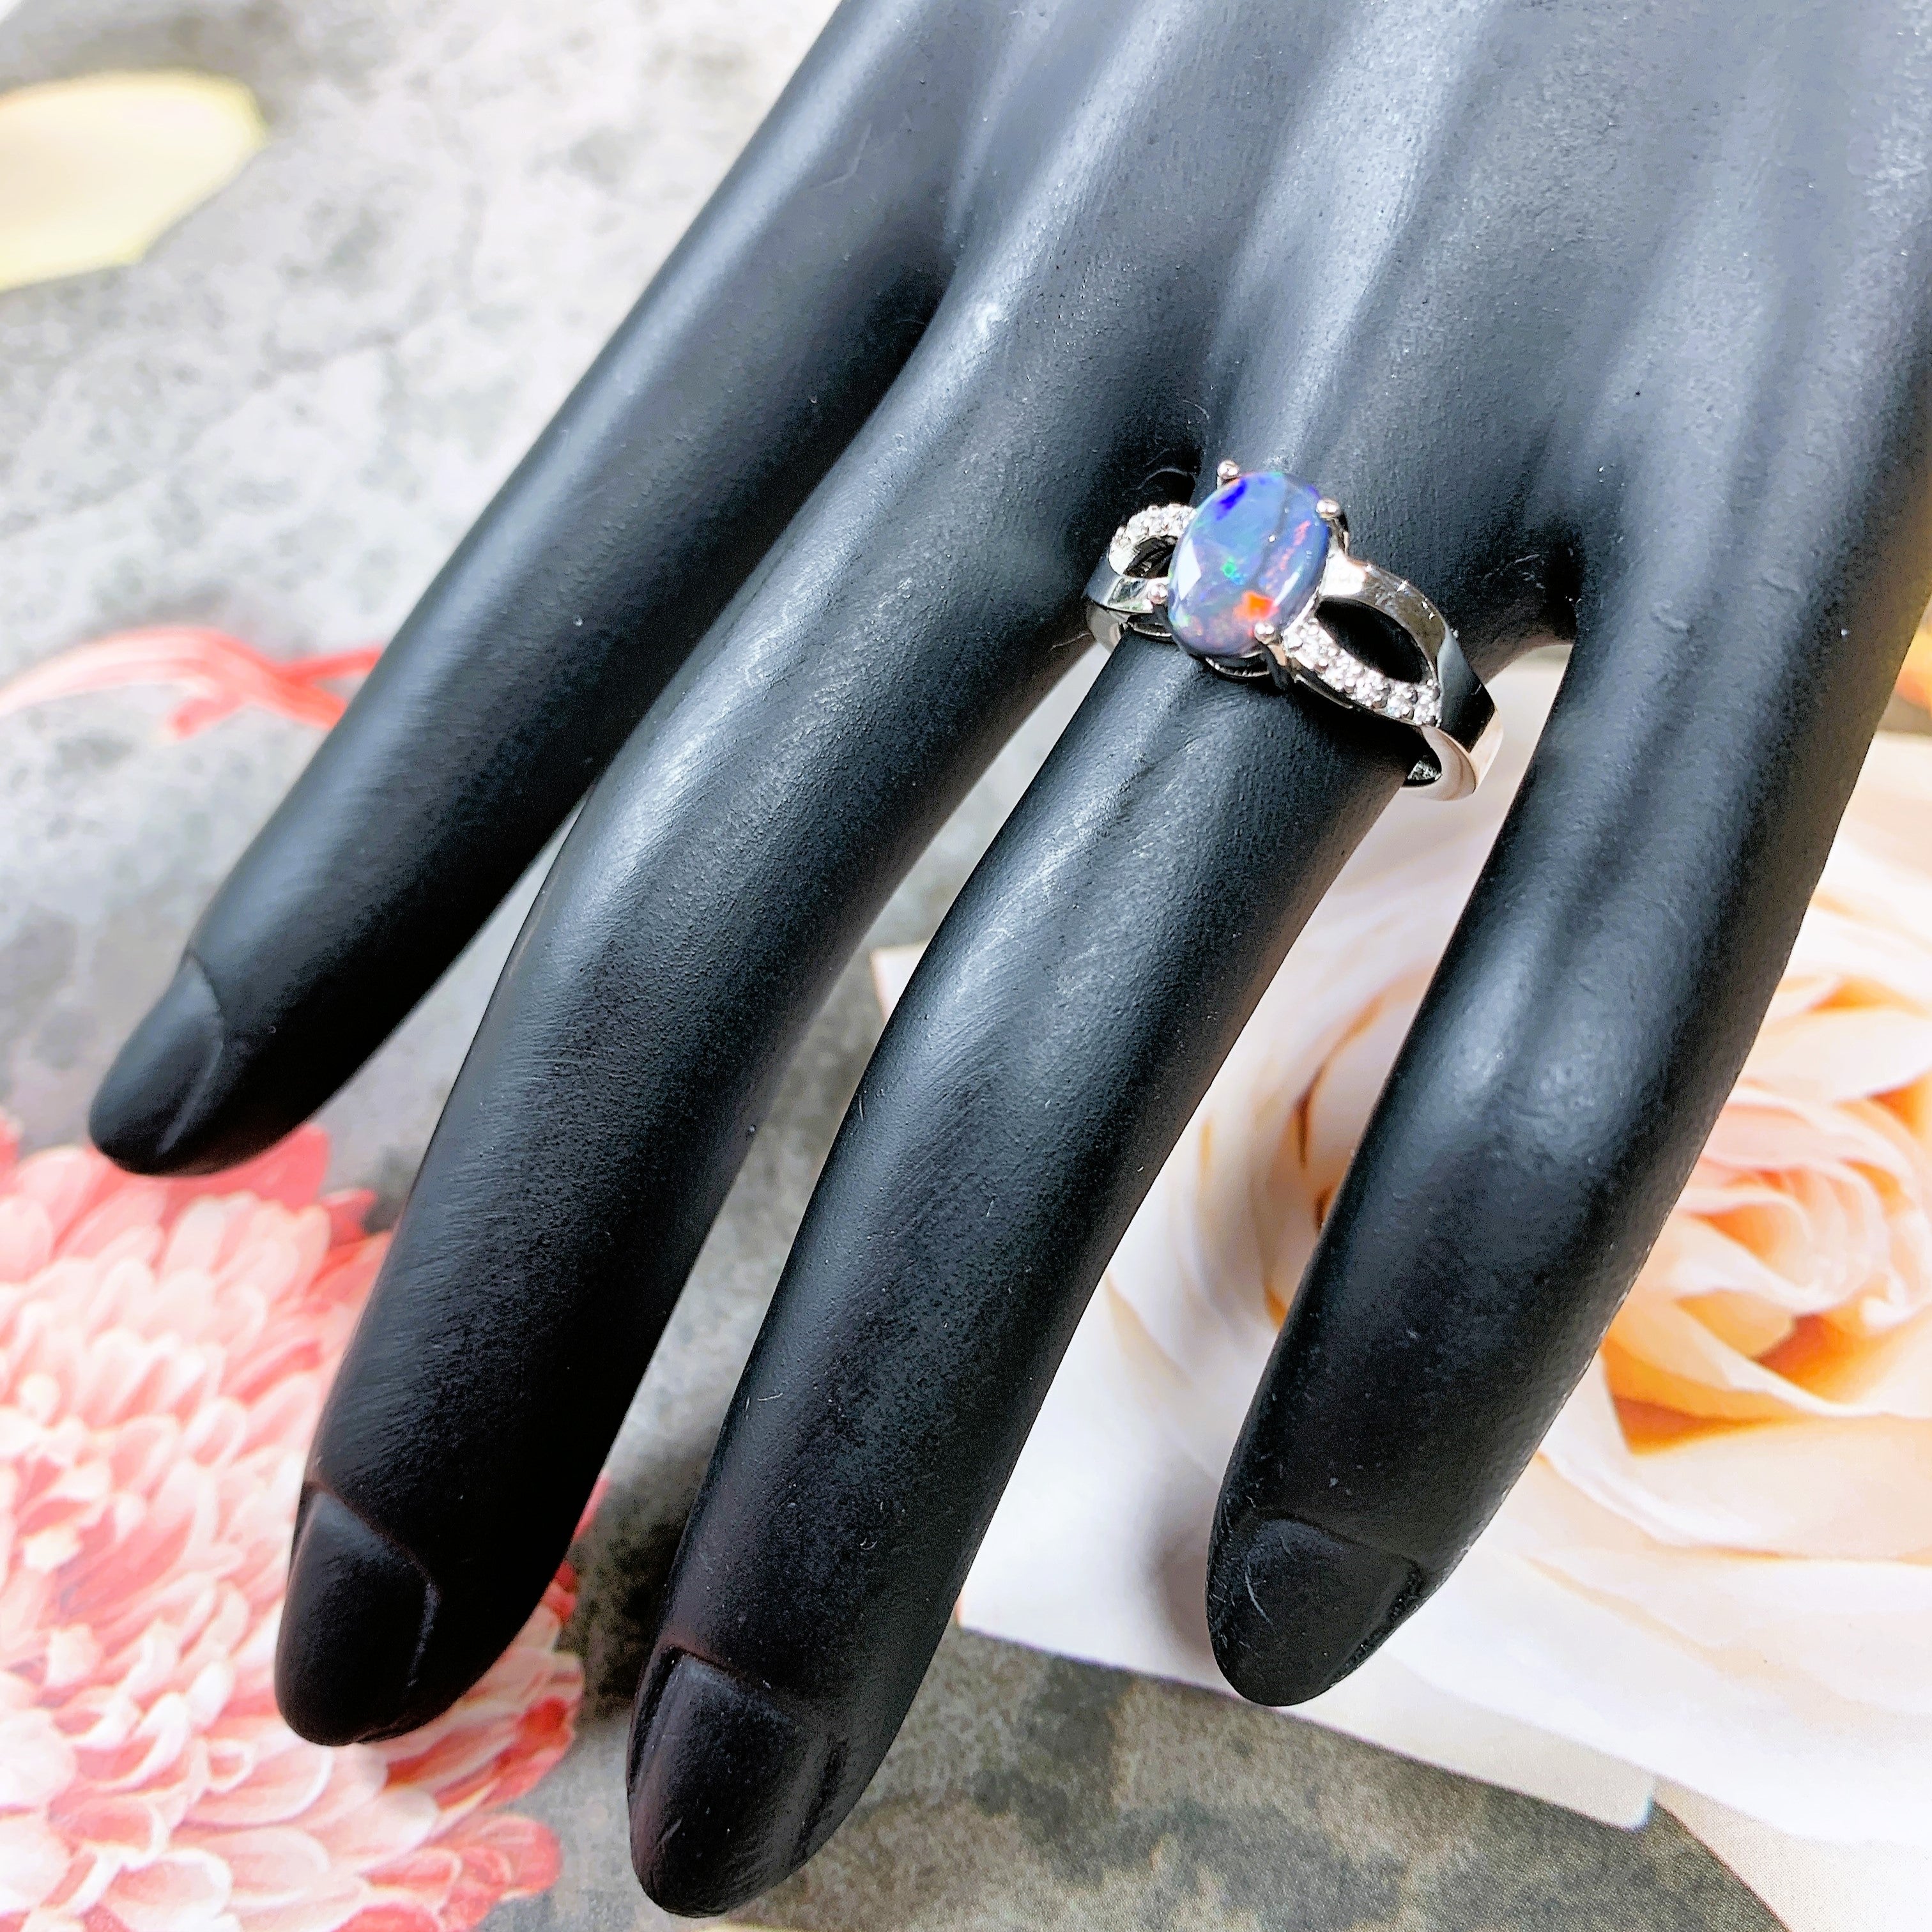 Platinum 1.02ct Black Fire Opal and Diamond ring - Masterpiece Jewellery Opal & Gems Sydney Australia | Online Shop